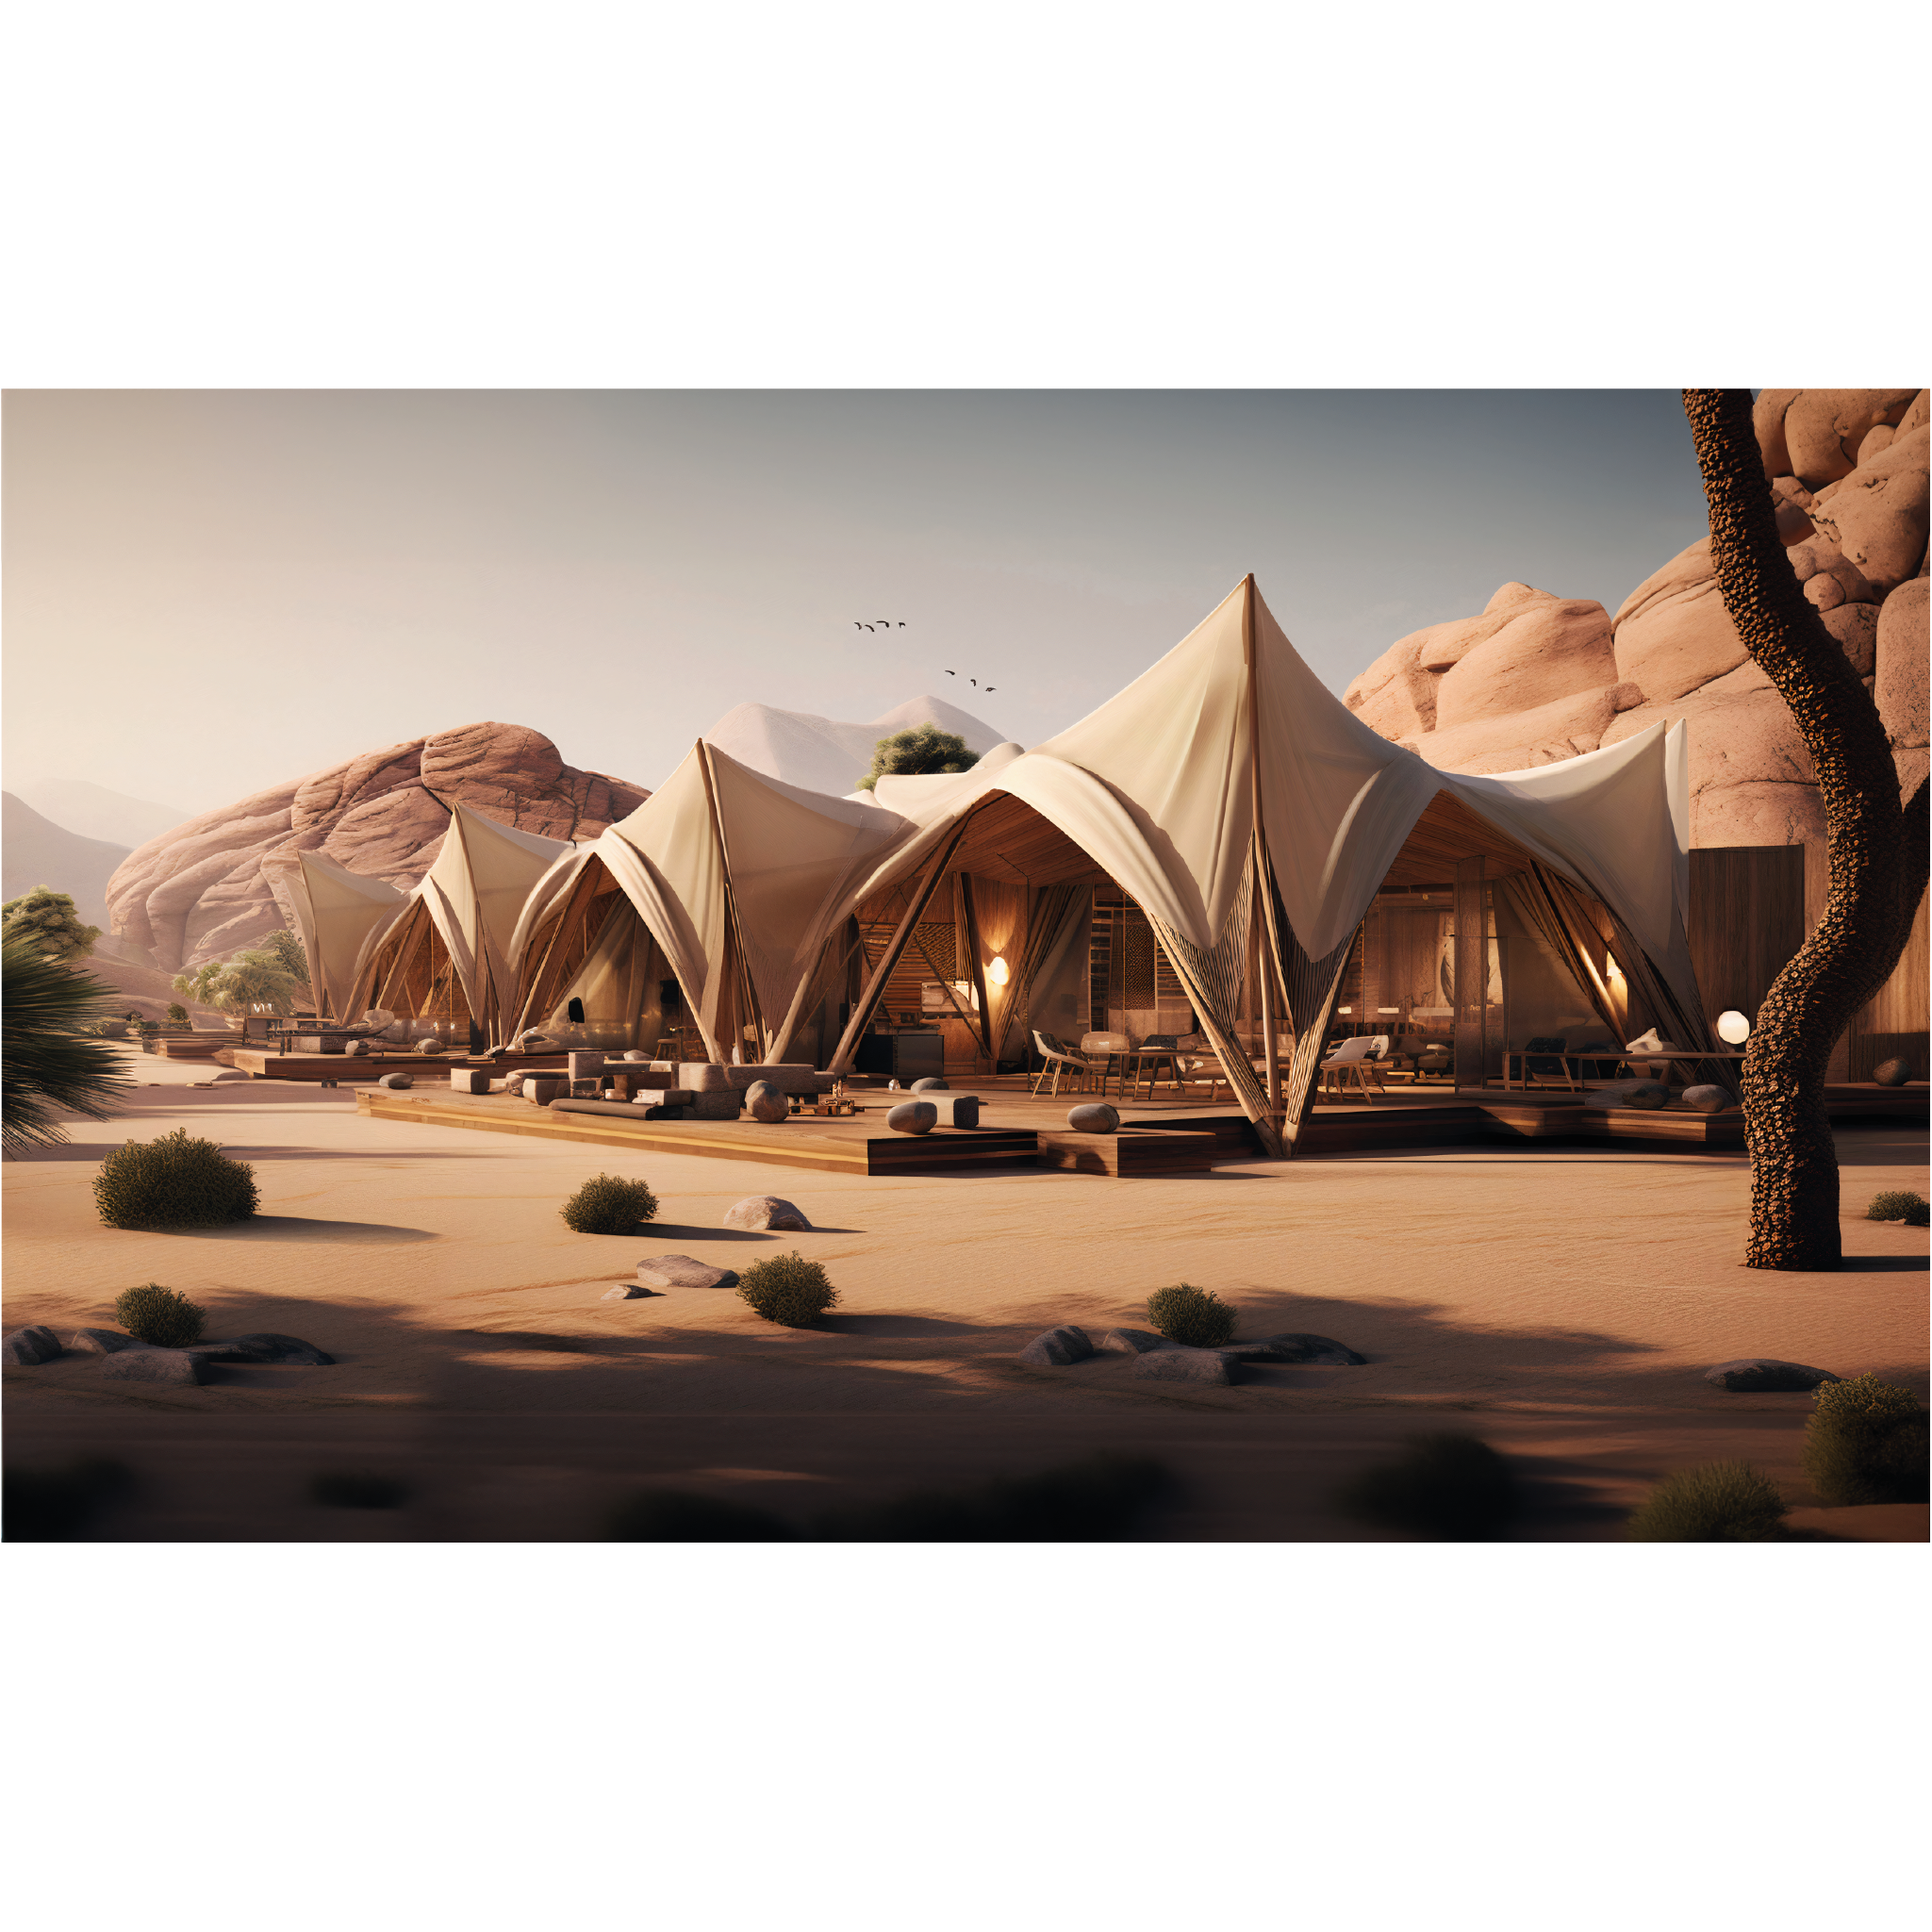 Desert Camp by Javad Bin Kuthub